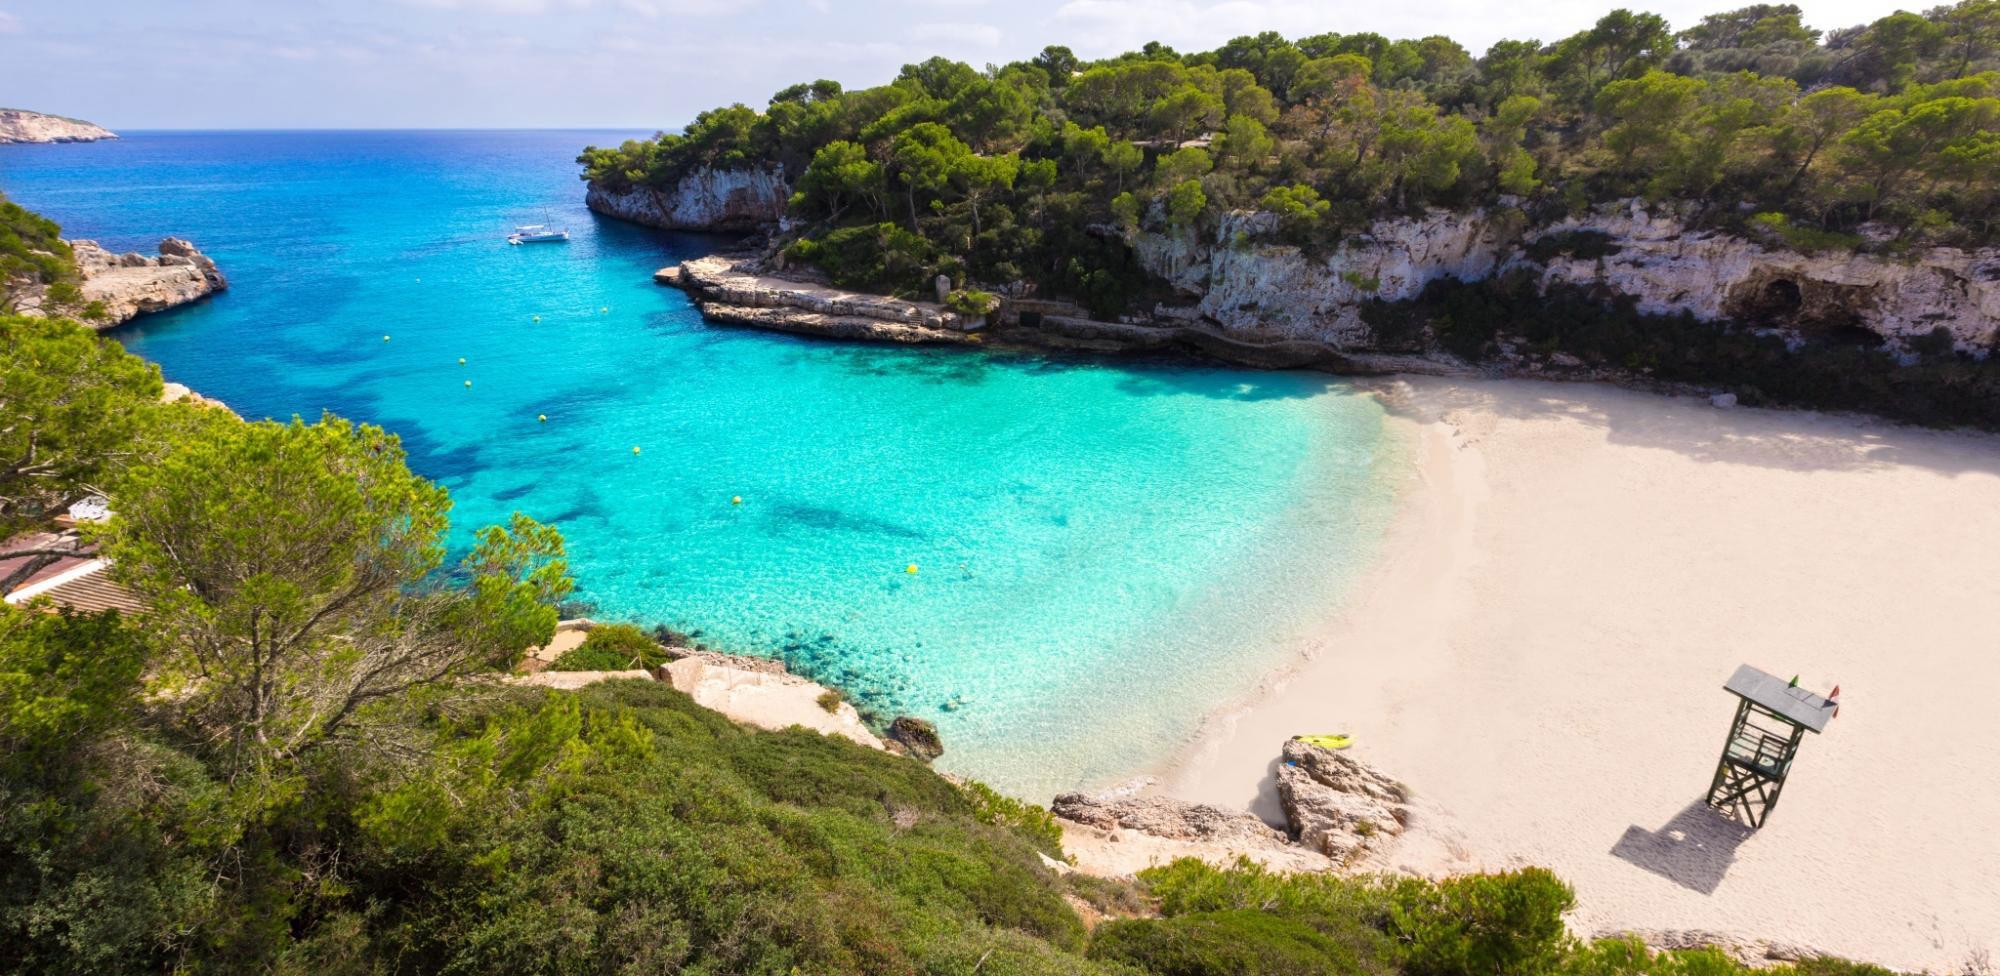 The Son Caliu Hotel  Spa Oasis's beautiful beach situated in faultless Mallorca.